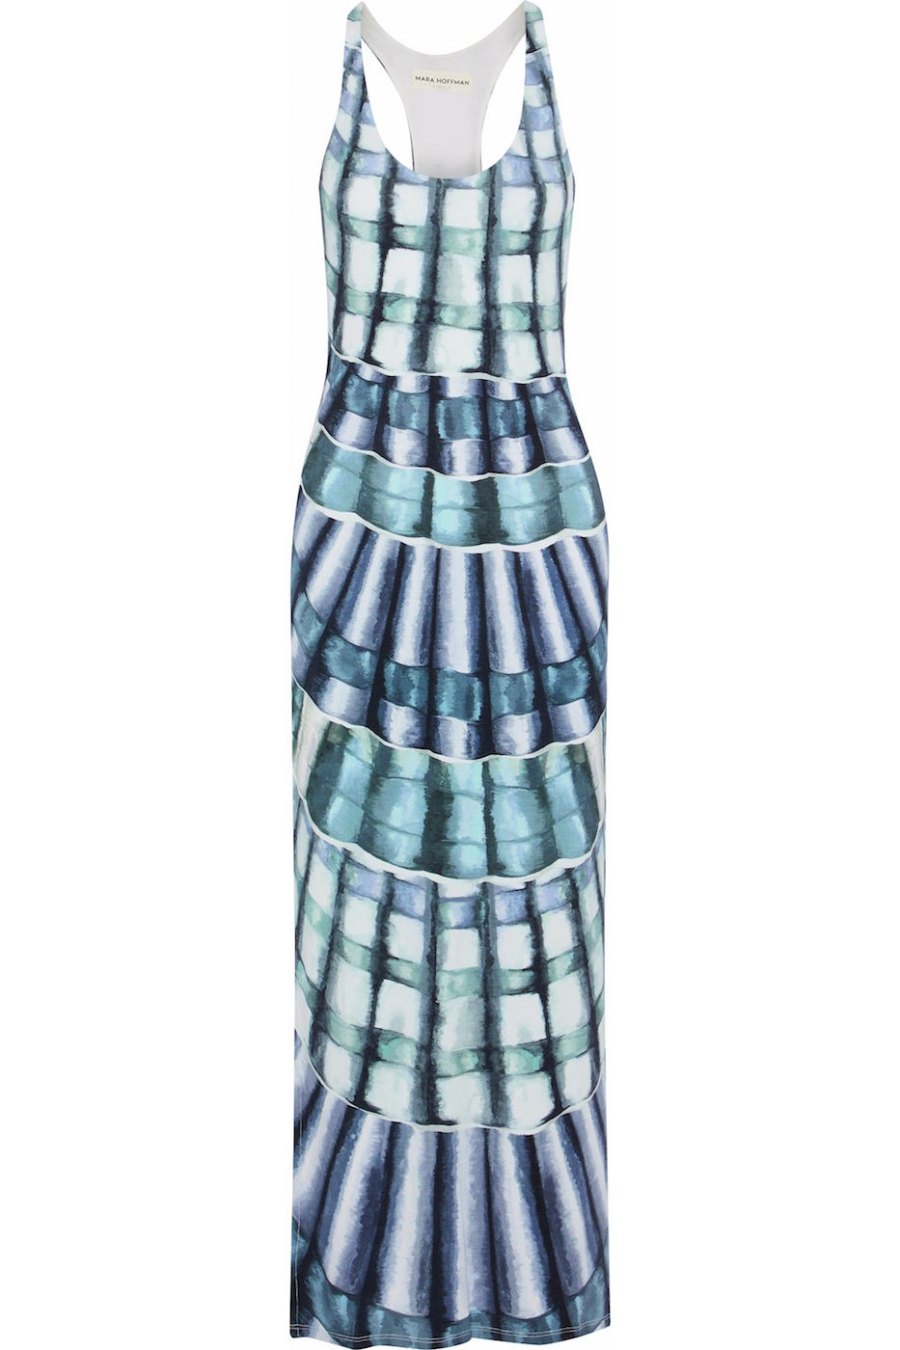 Mara Hoffman Printed Stretch-Modal Jersey Maxi Dress